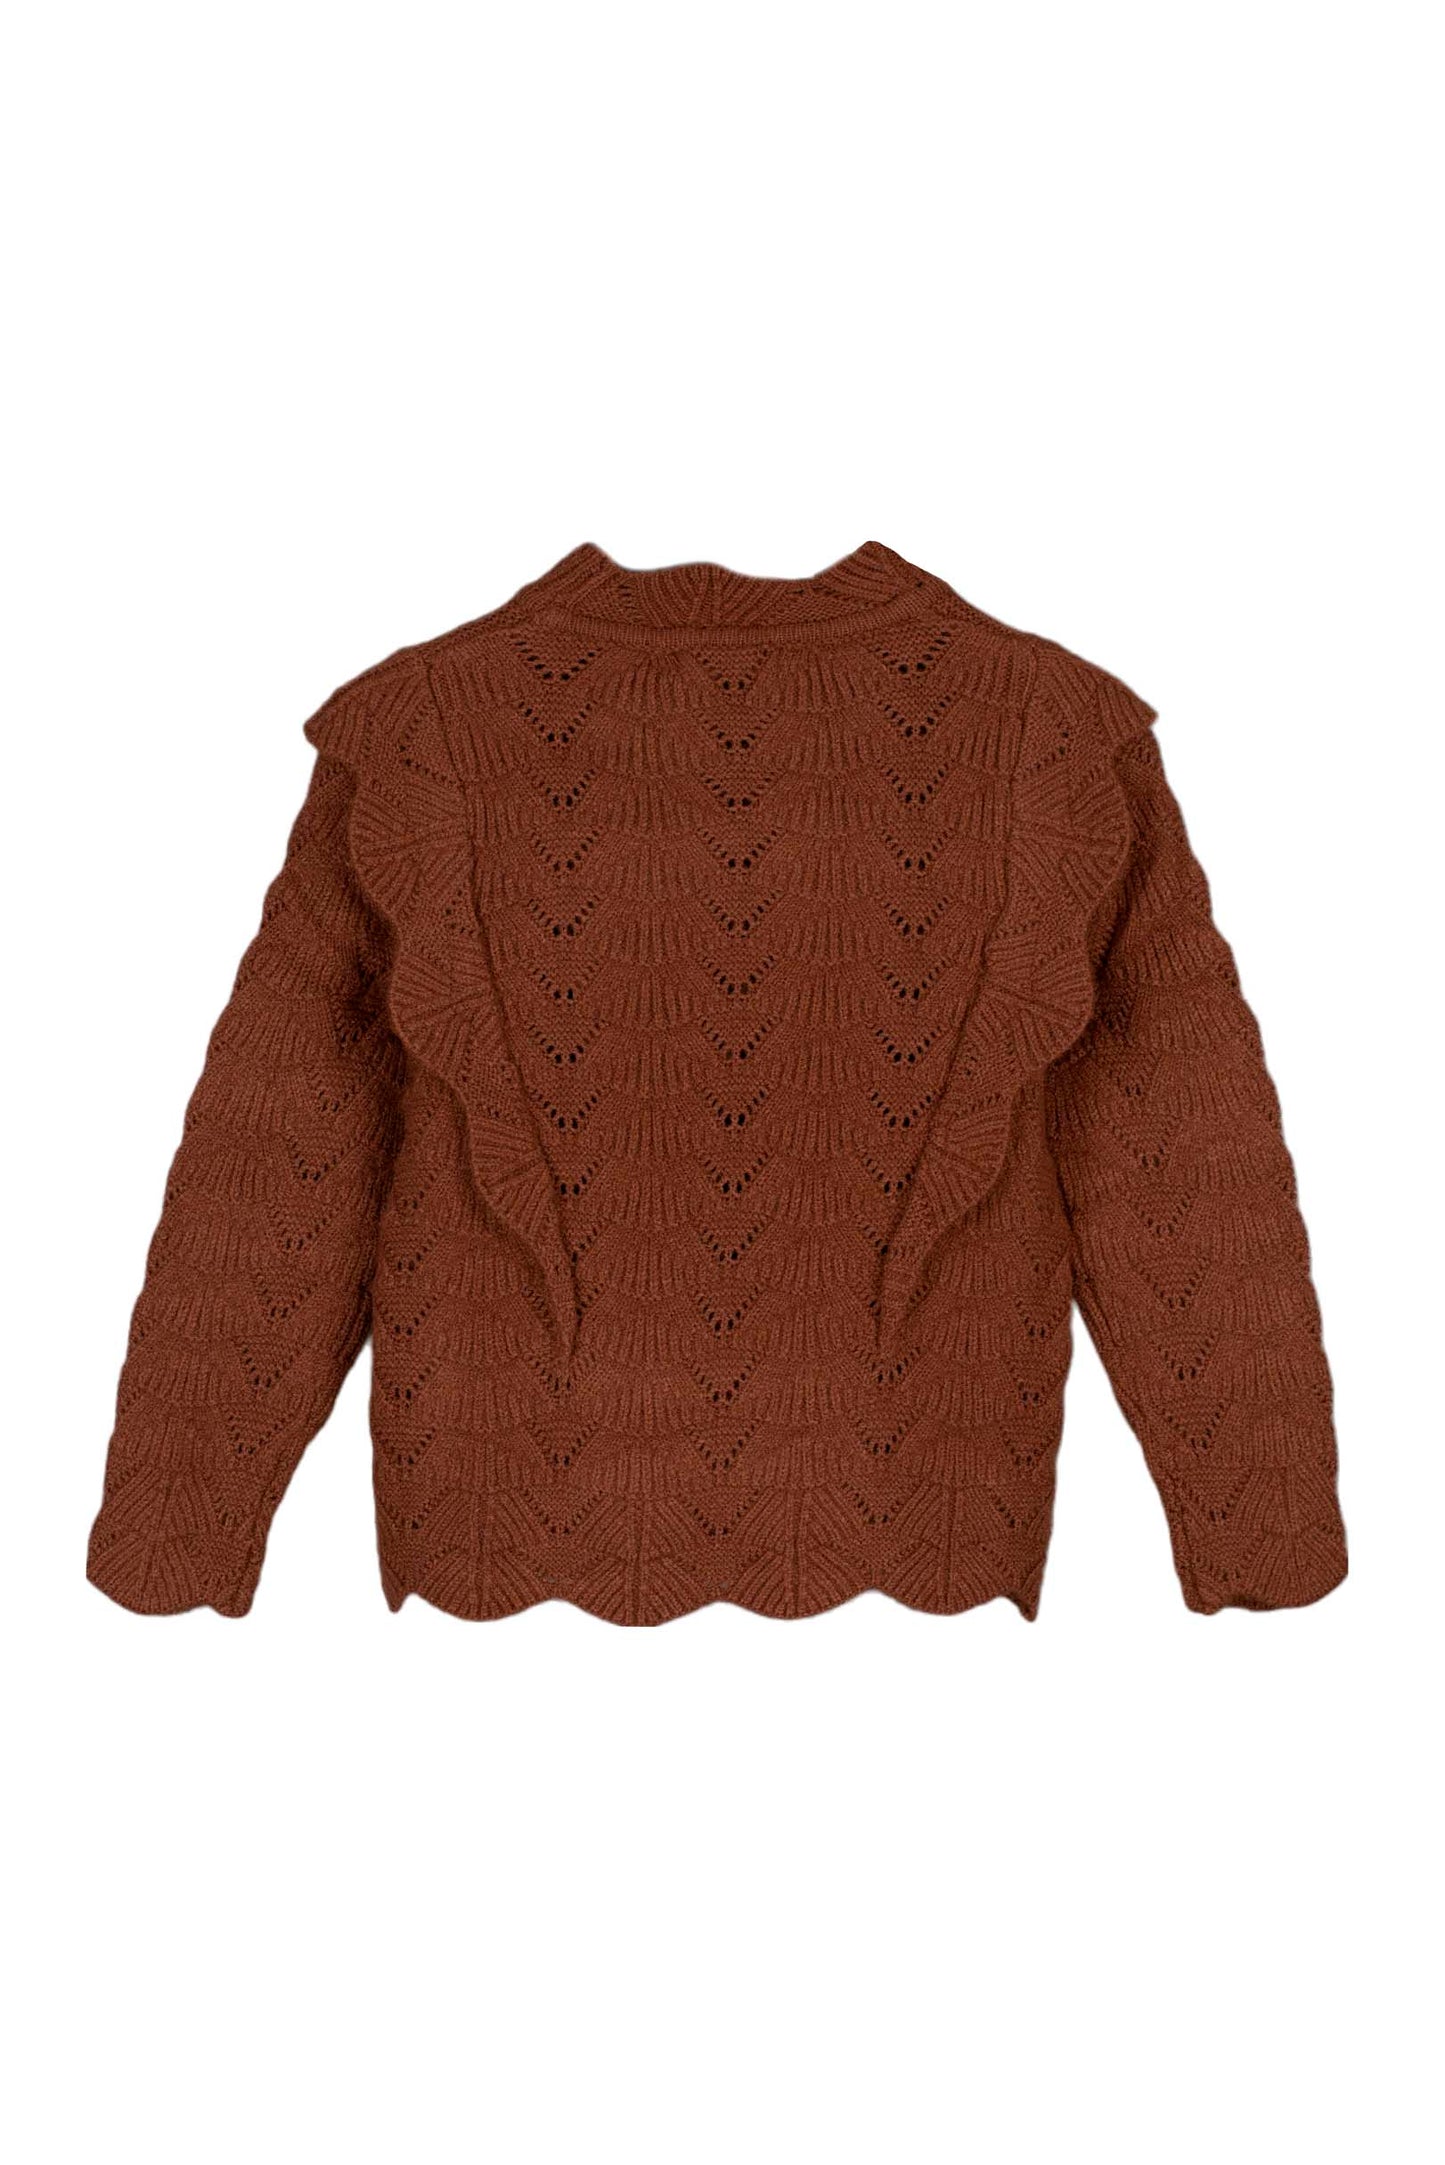 benna ruffle blouse | carob brown